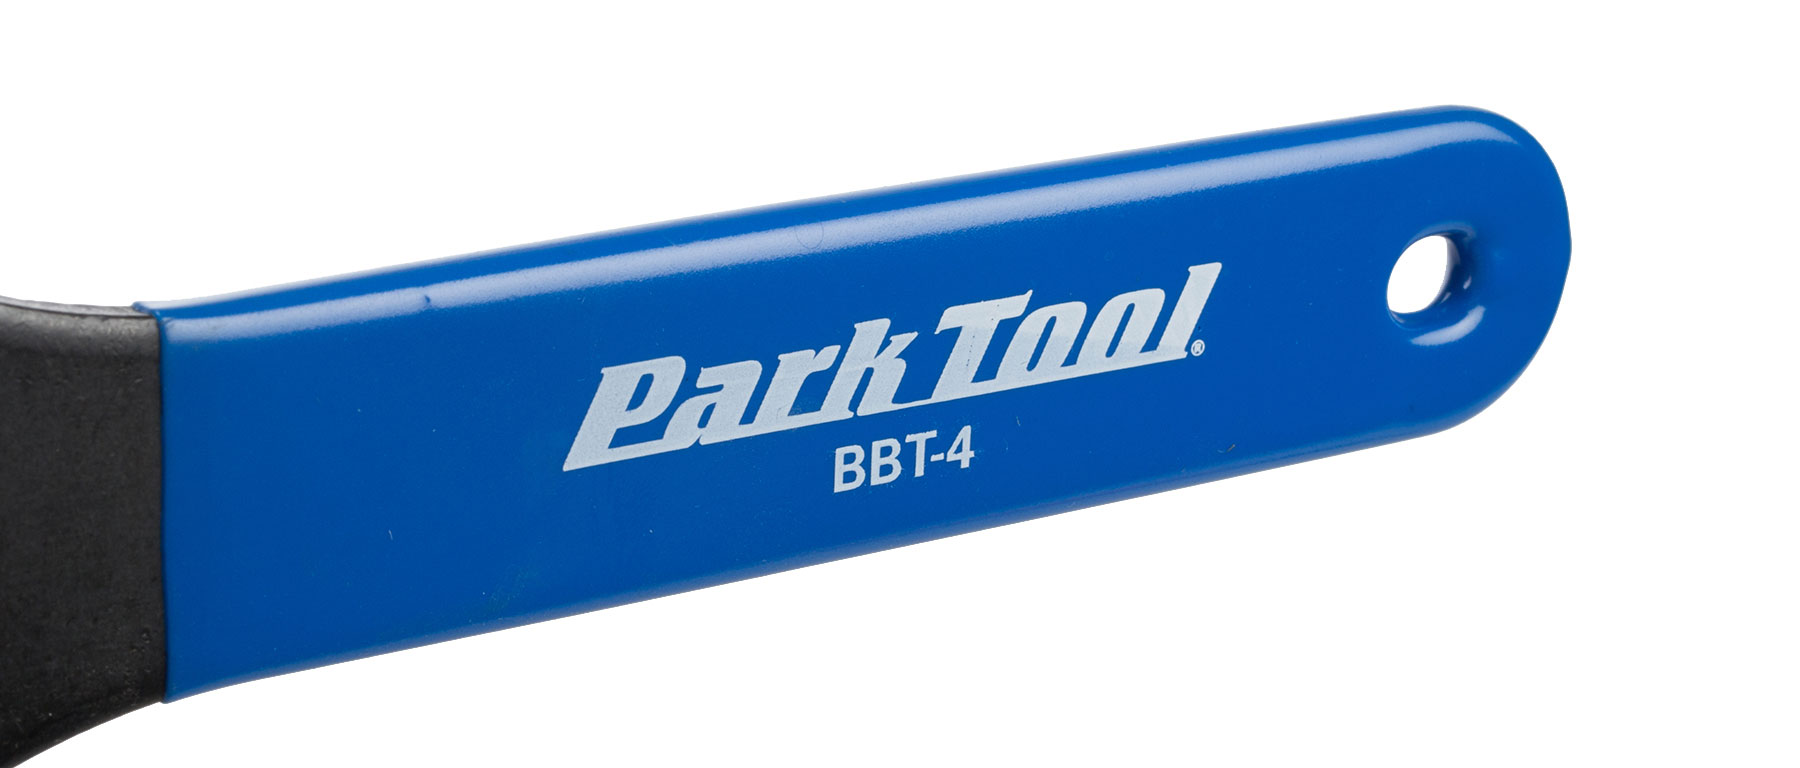 Park Tool BBT-4 Campagnolo Bottom Bracket Tool